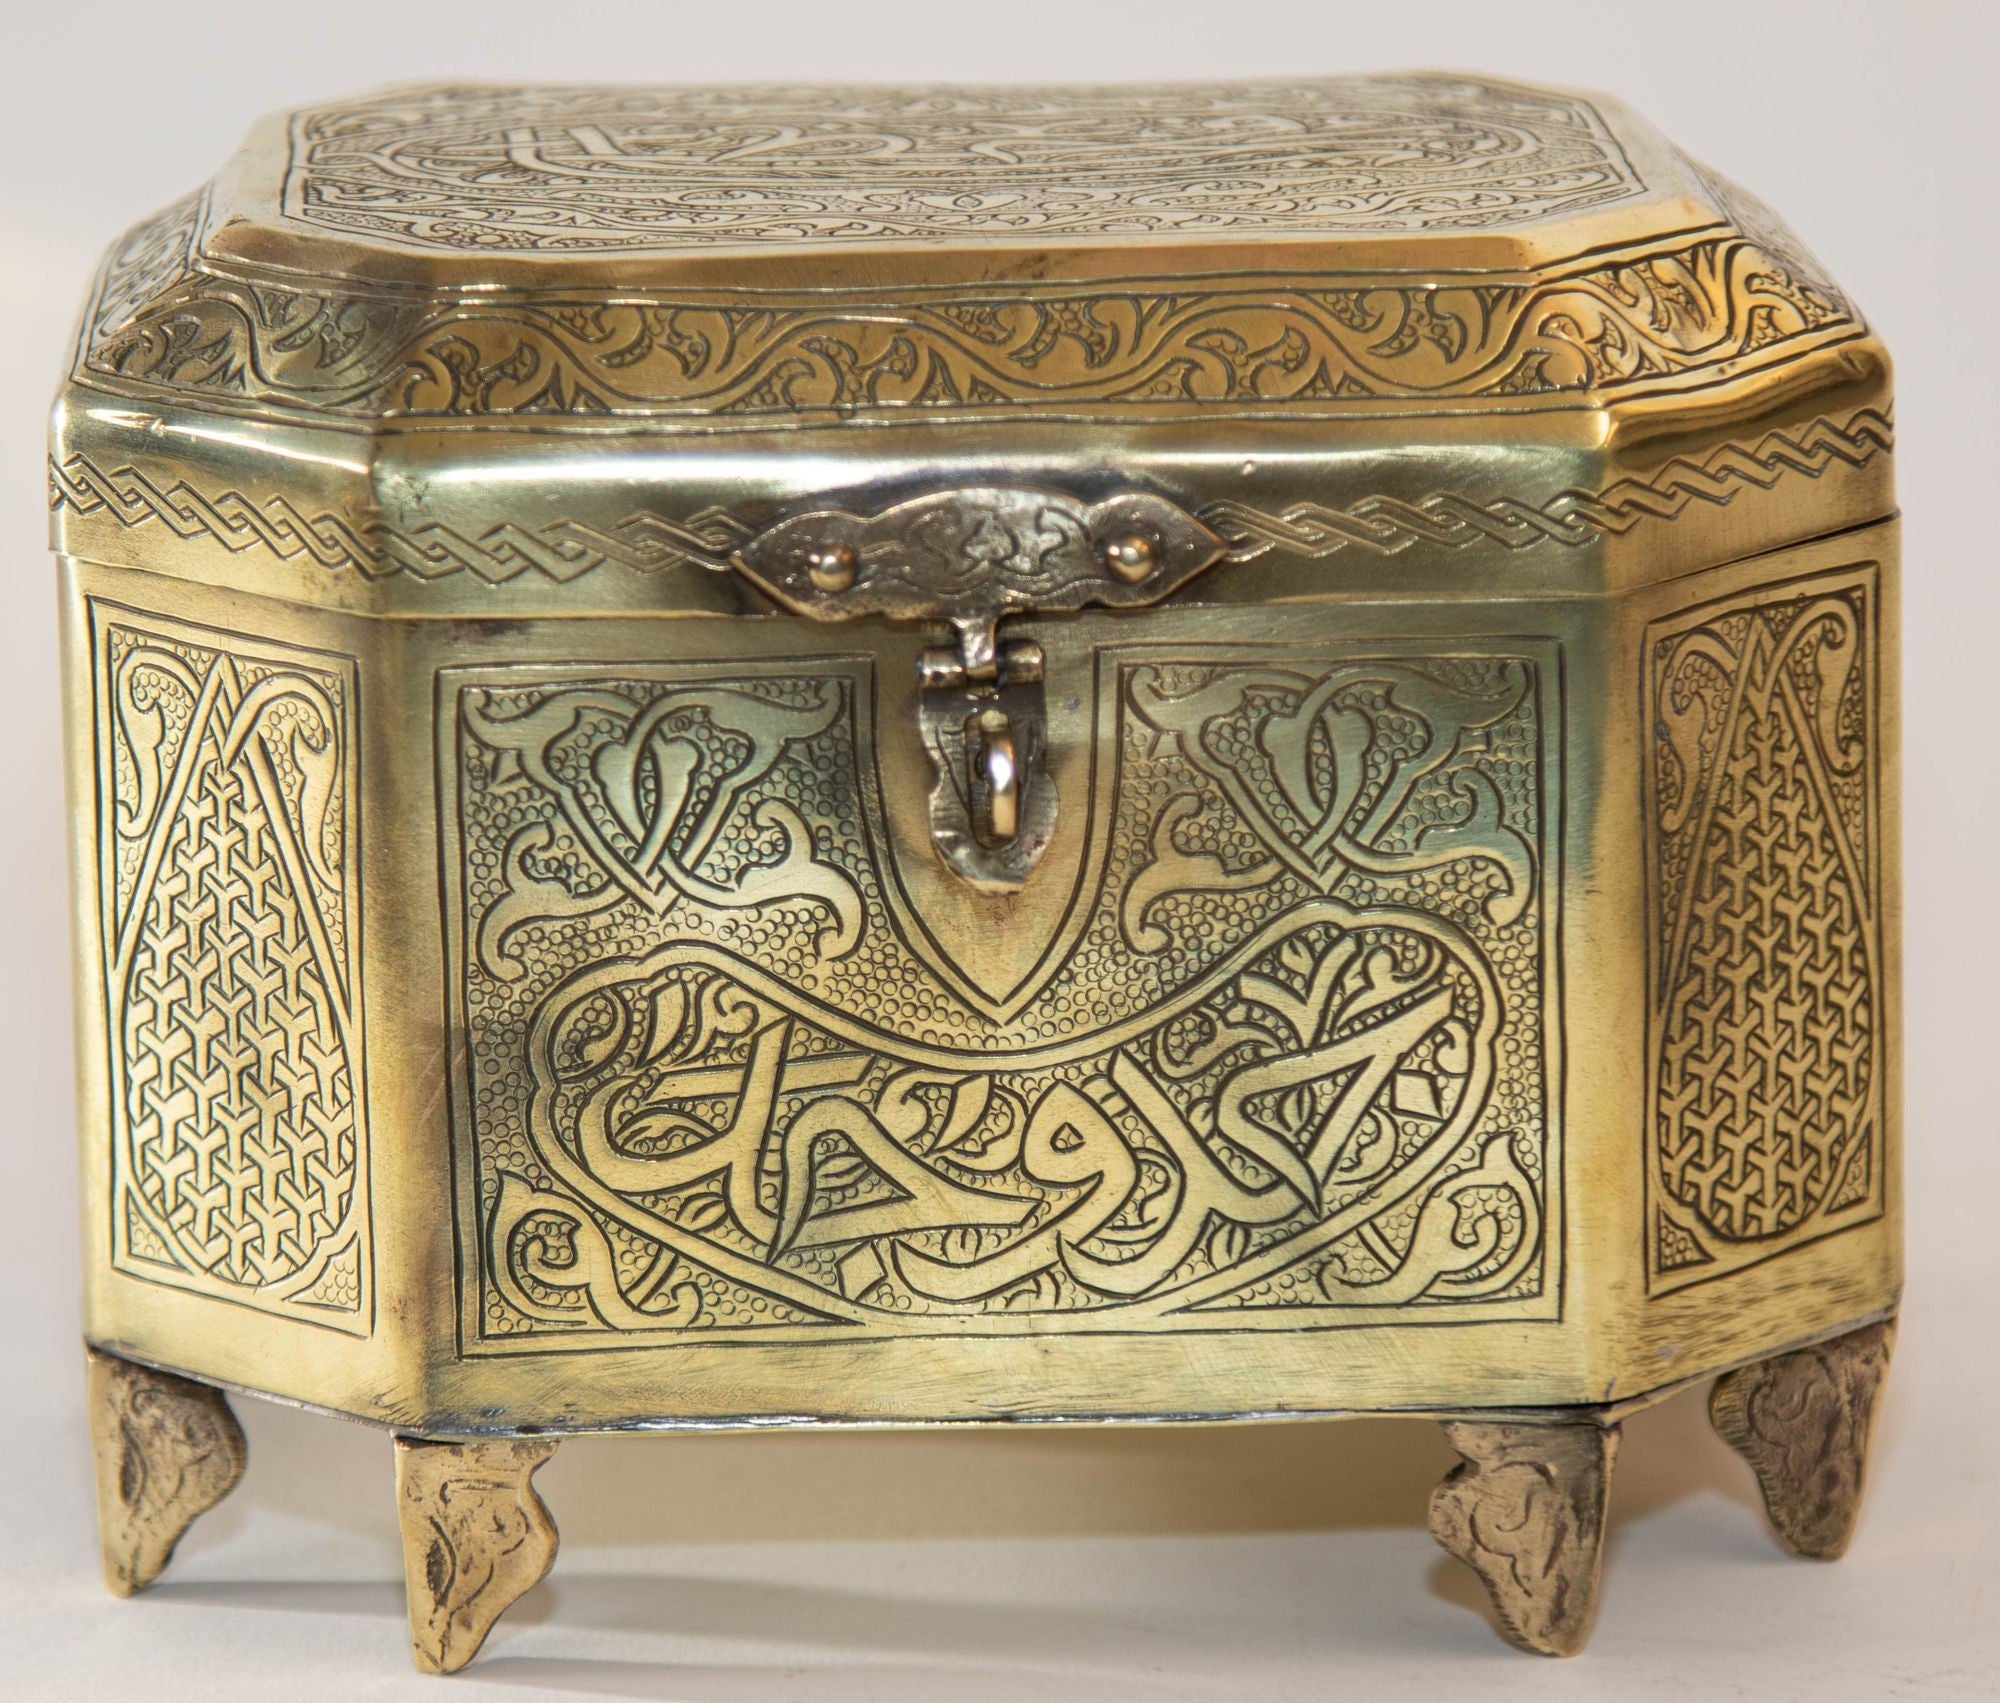 Vintage brass box